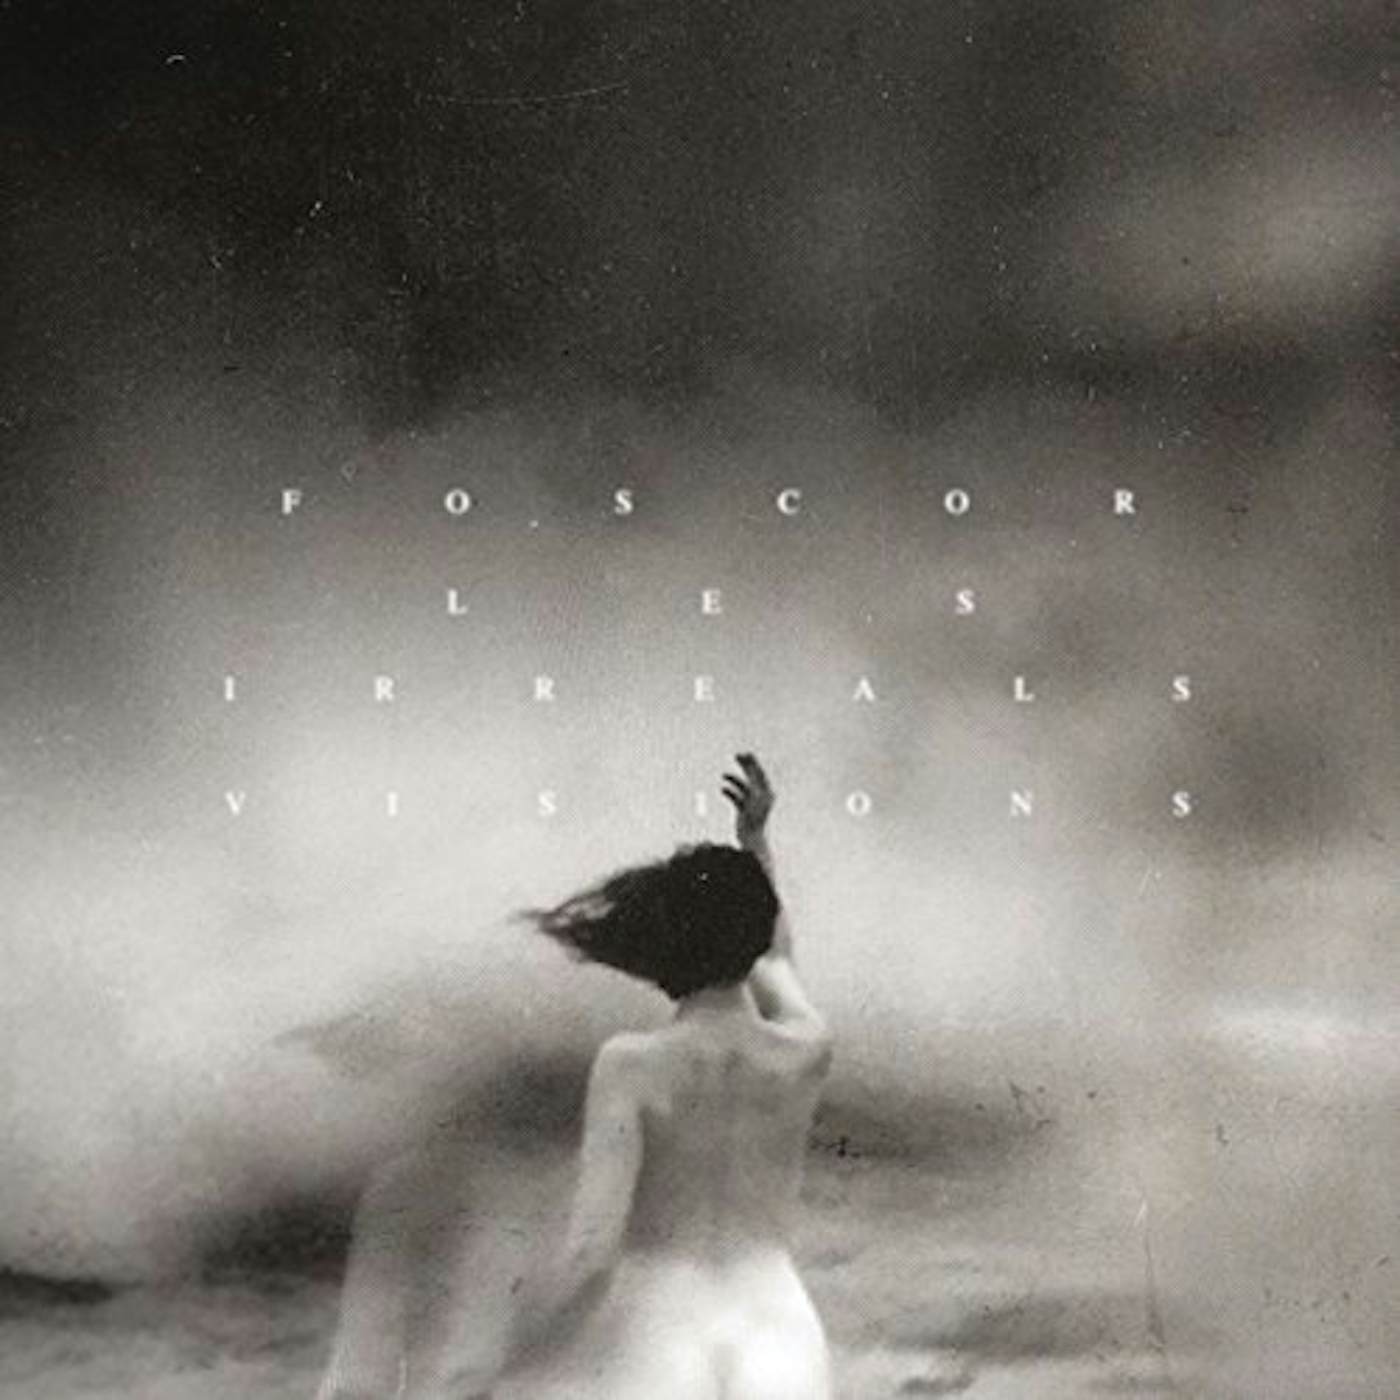 Foscor LES IRREALS VISIONS (WHITE VINYL) Vinyl Record